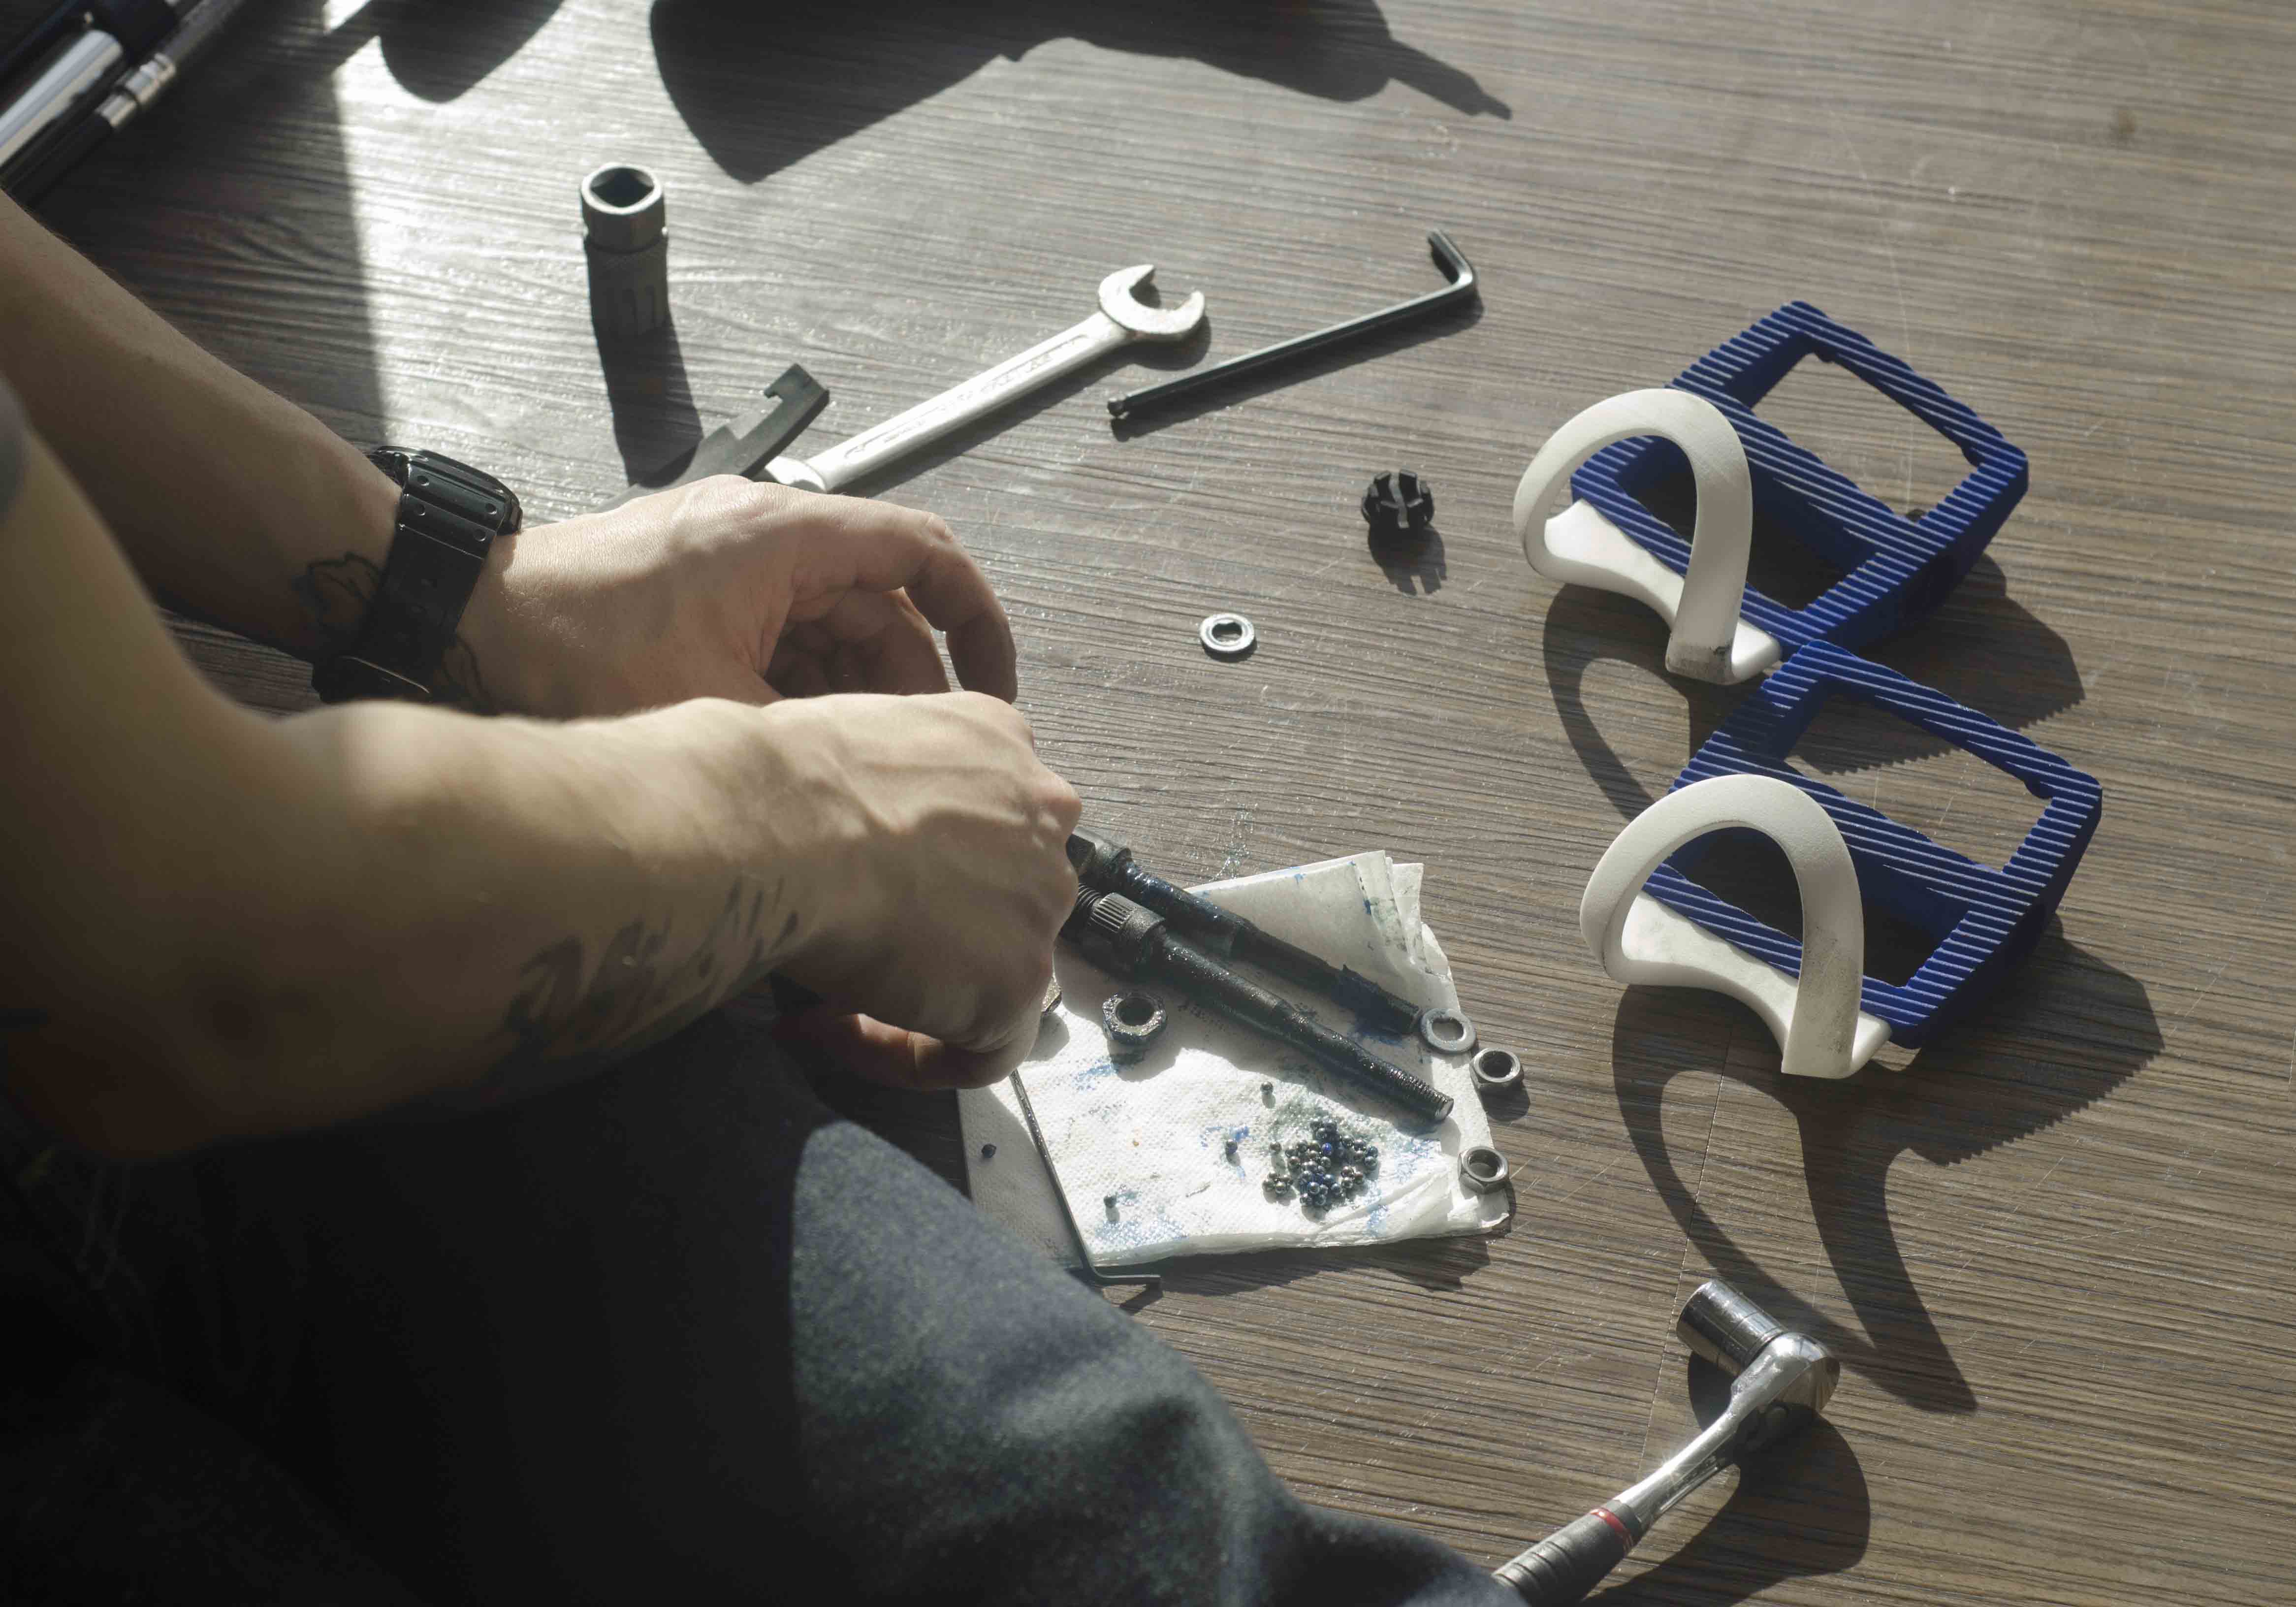 Sculpteo-Bike-Project 3D Printed Bike pedals